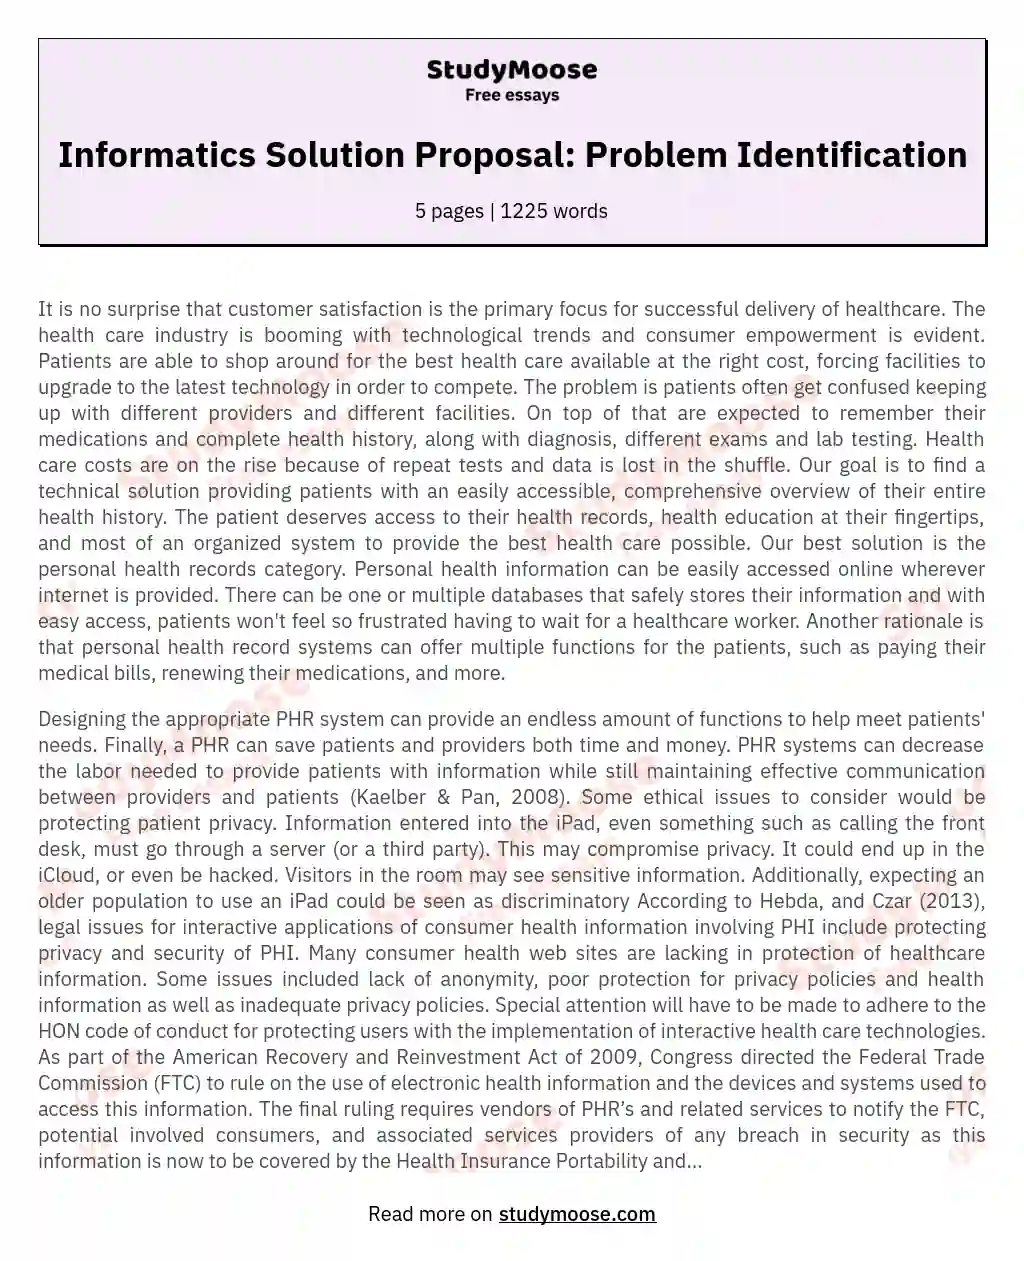 Informatics Solution Proposal: Problem Identification essay